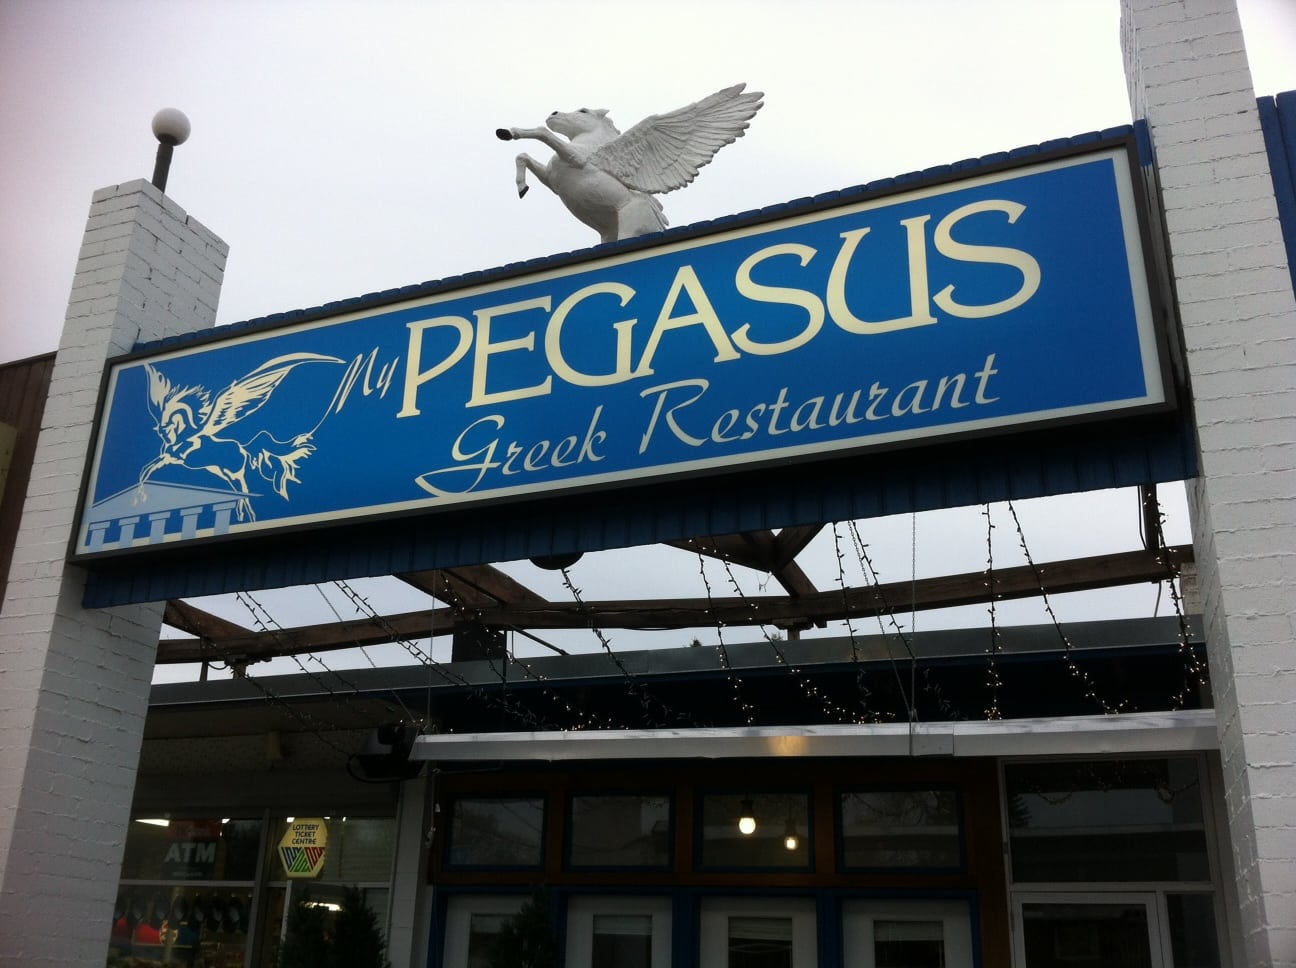 Pegasus Calgary Restaurant Altadore